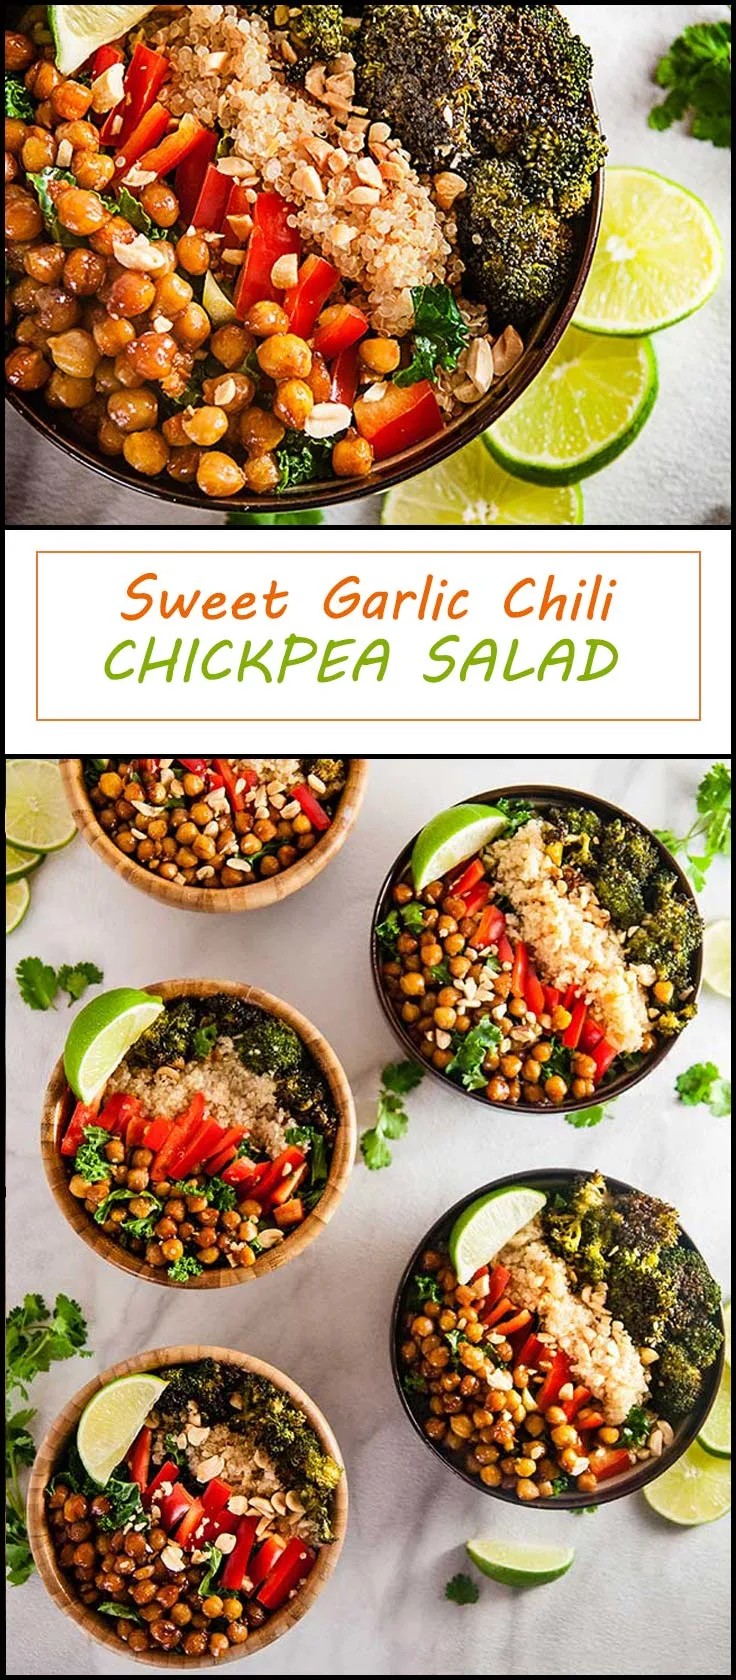 Sweet Garlic Chili Chickpea Salad with Roasted Broccoli from www.seasonedsprinkles.com